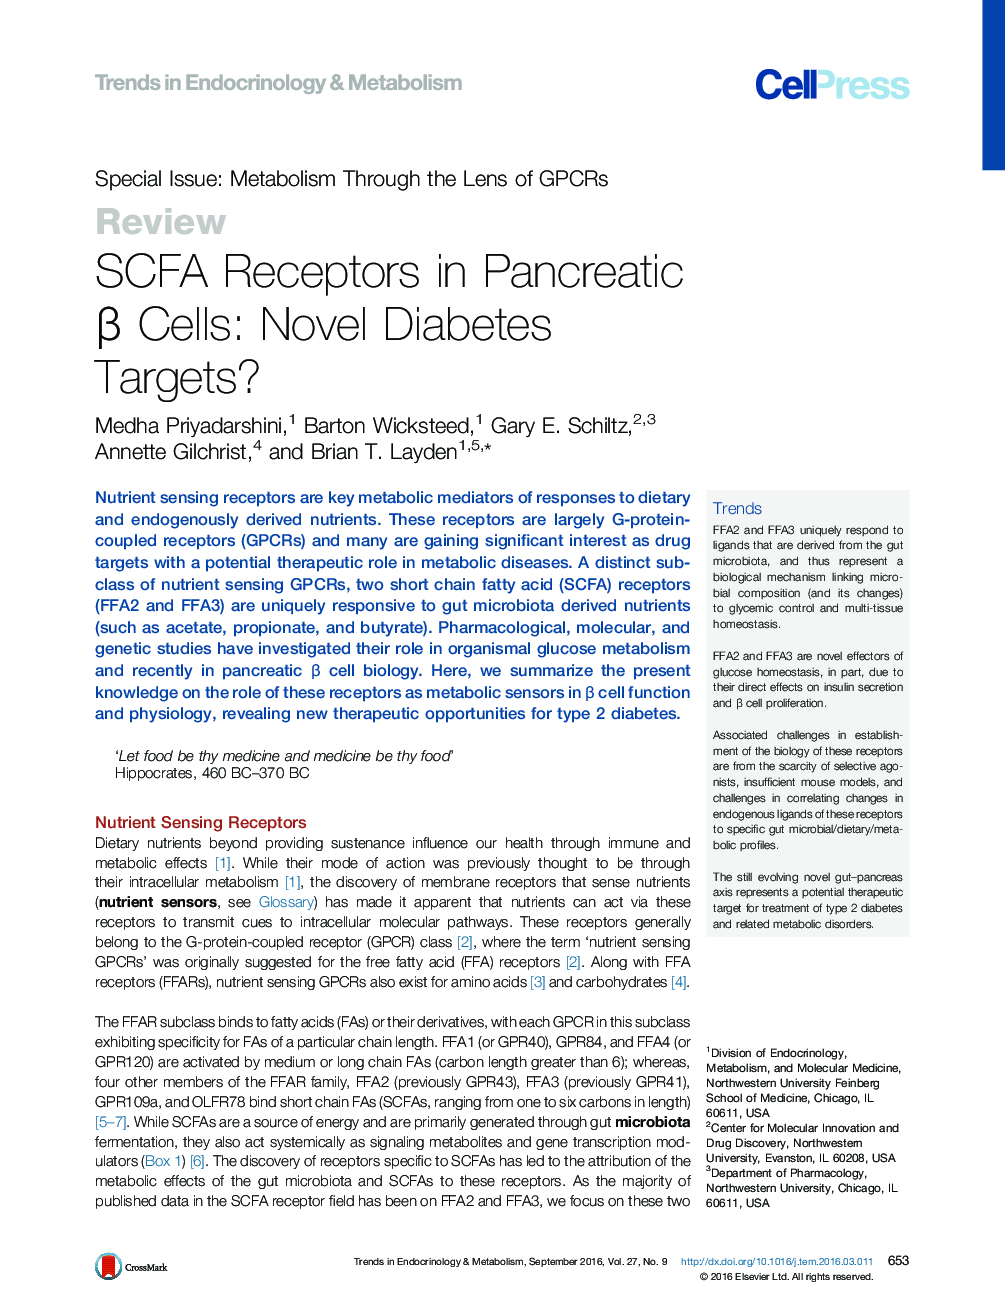 SCFA Receptors in Pancreatic β Cells: Novel Diabetes Targets?